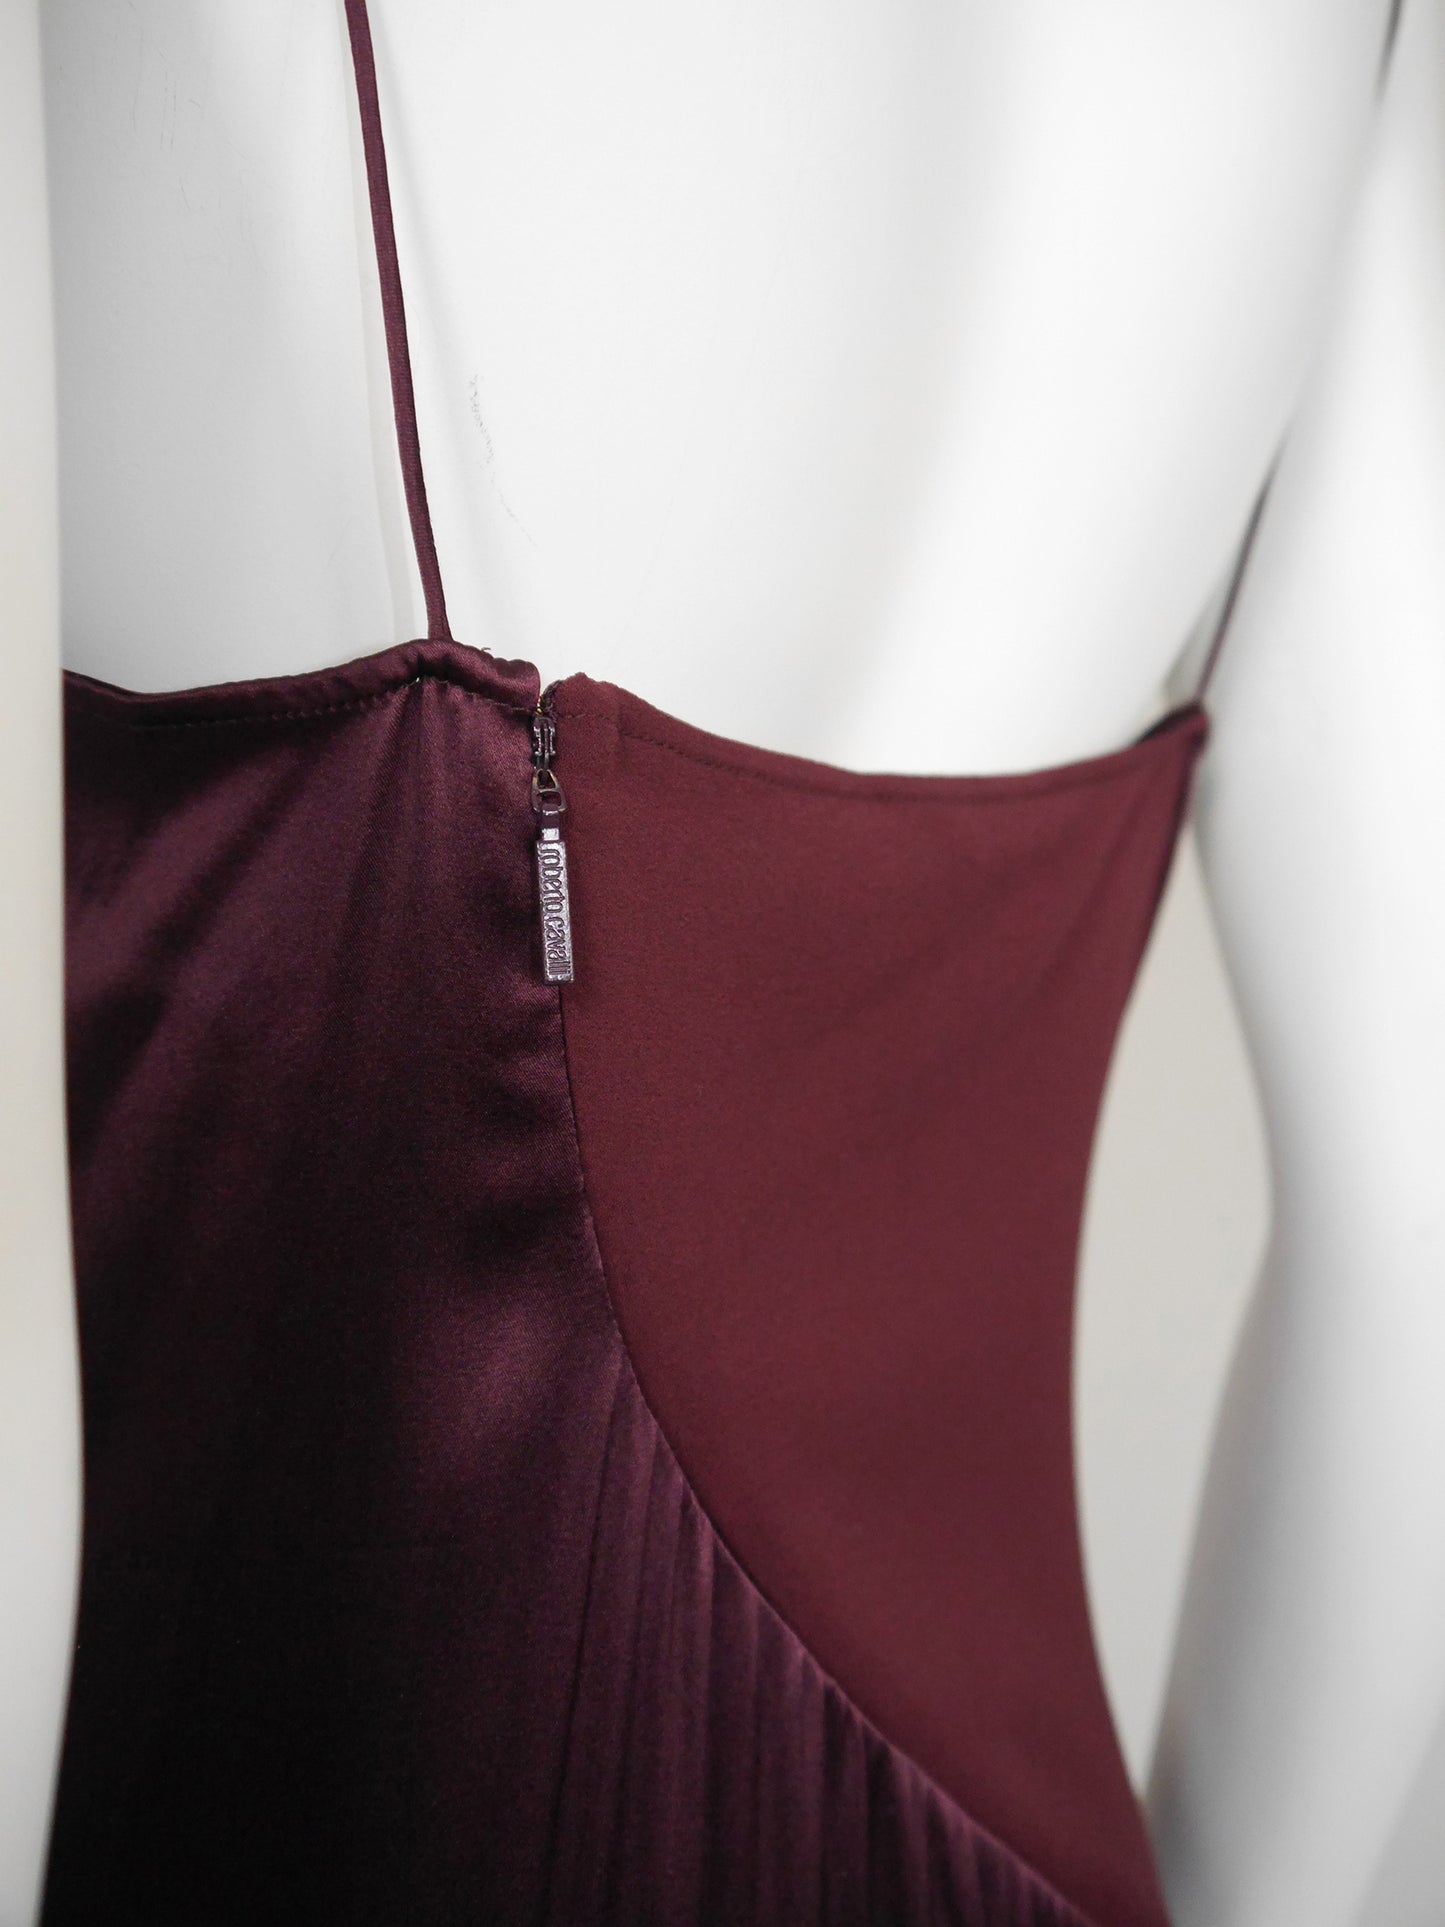 ROBERTO CAVALLI Fall 2004 Vintage Burgundy Red Silk Stretch Maxi Evening Gown Size L